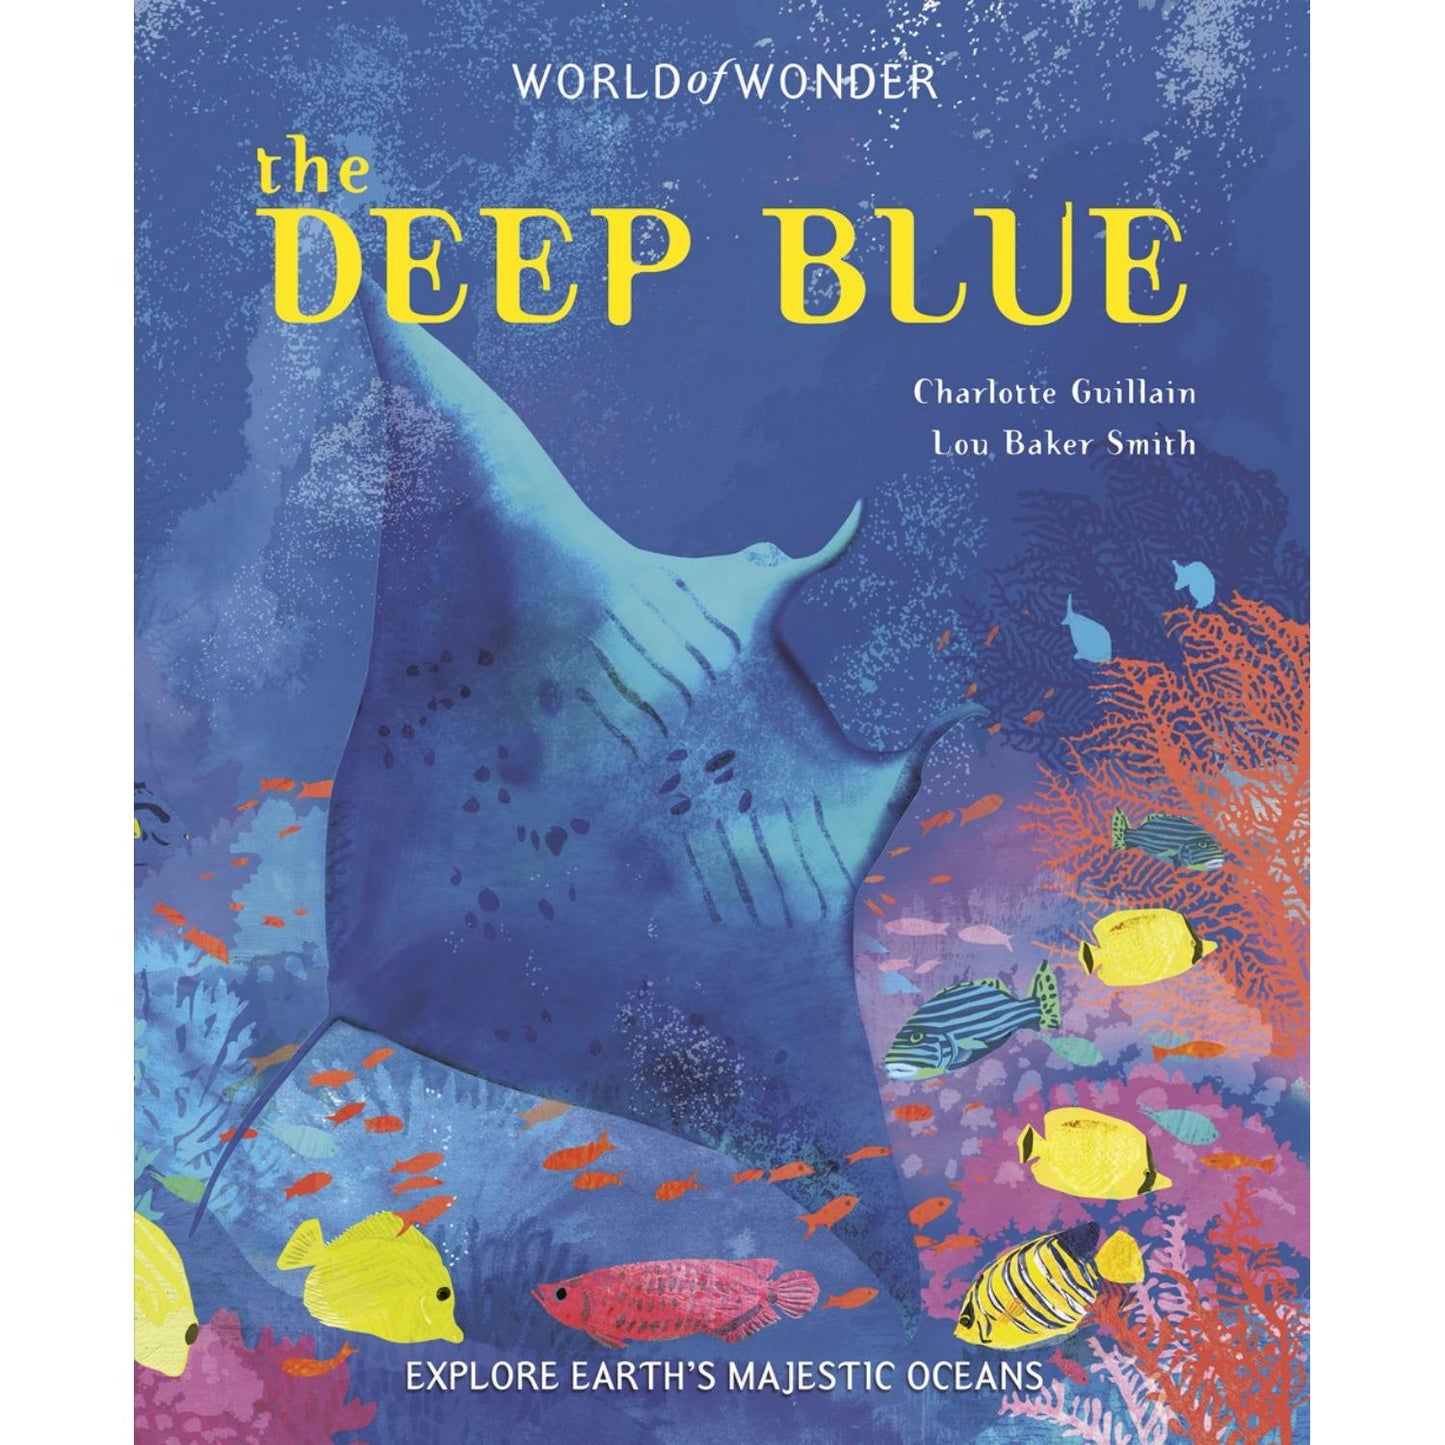 The Deep Blue - World of Wonder Series | Children’s Book on Oceans & Seas